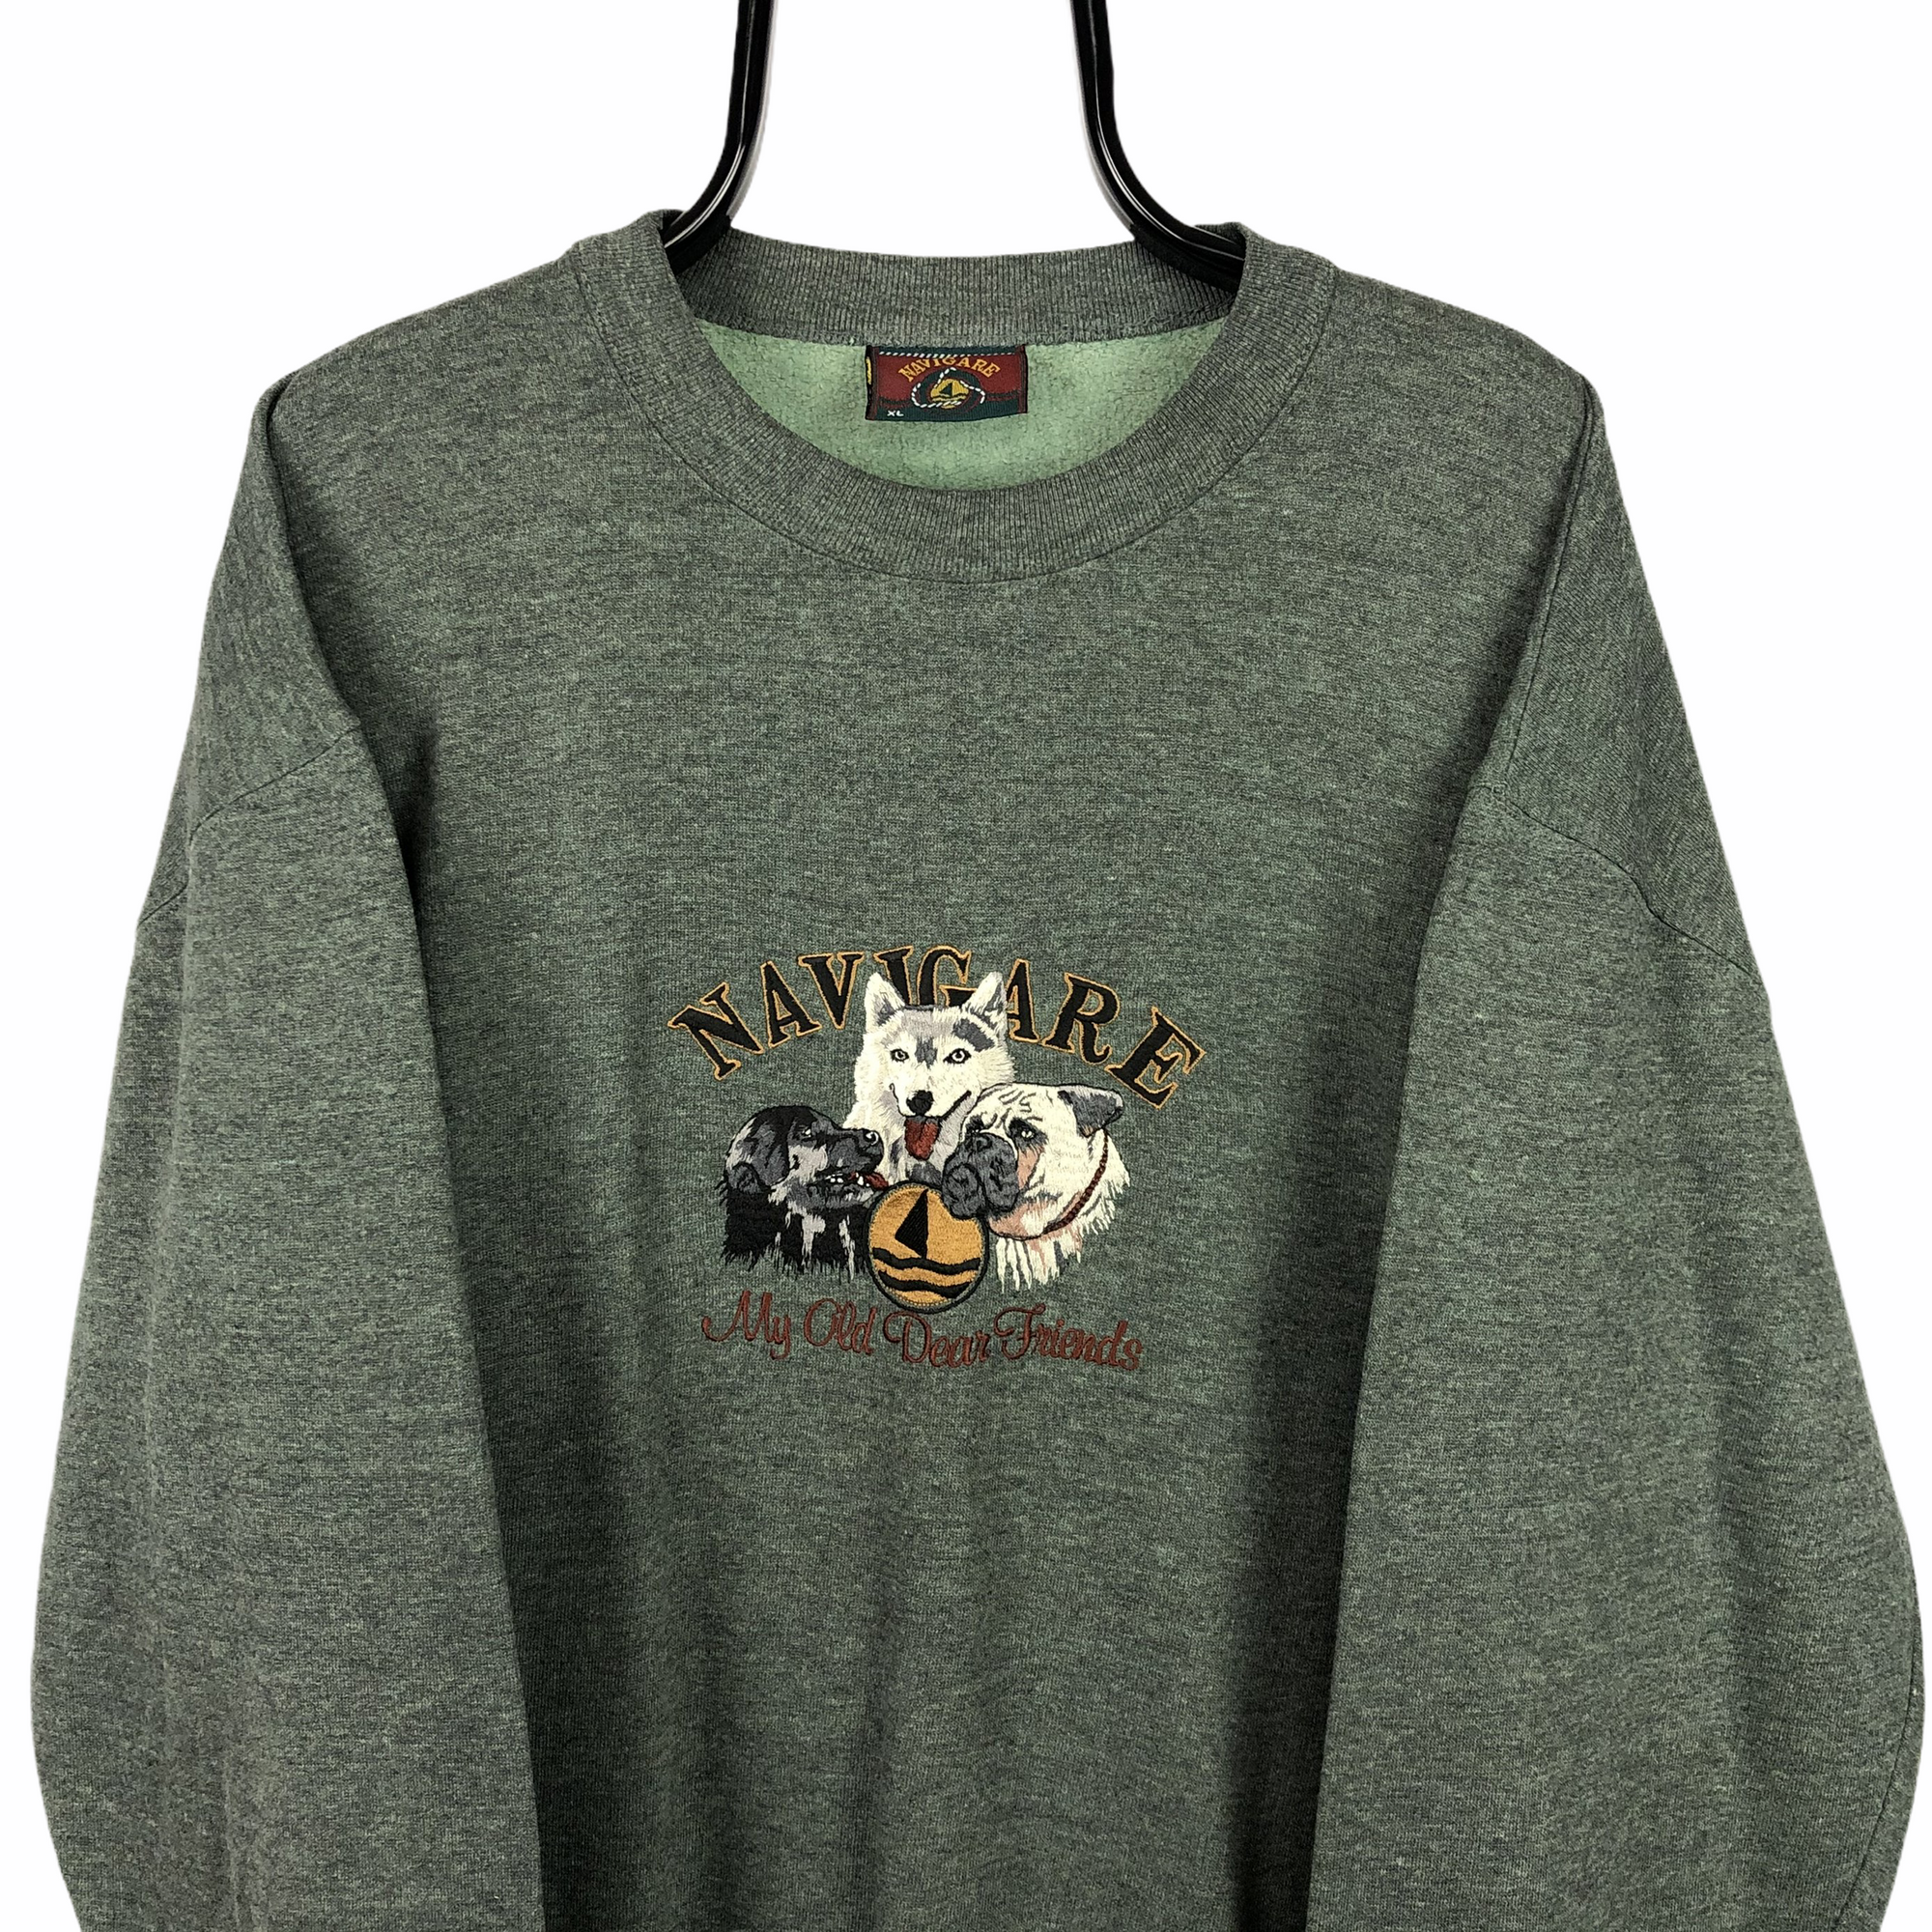 Vintage 90s Dogs Embroidery Sweatshirt - Men's XL/Women's XXL